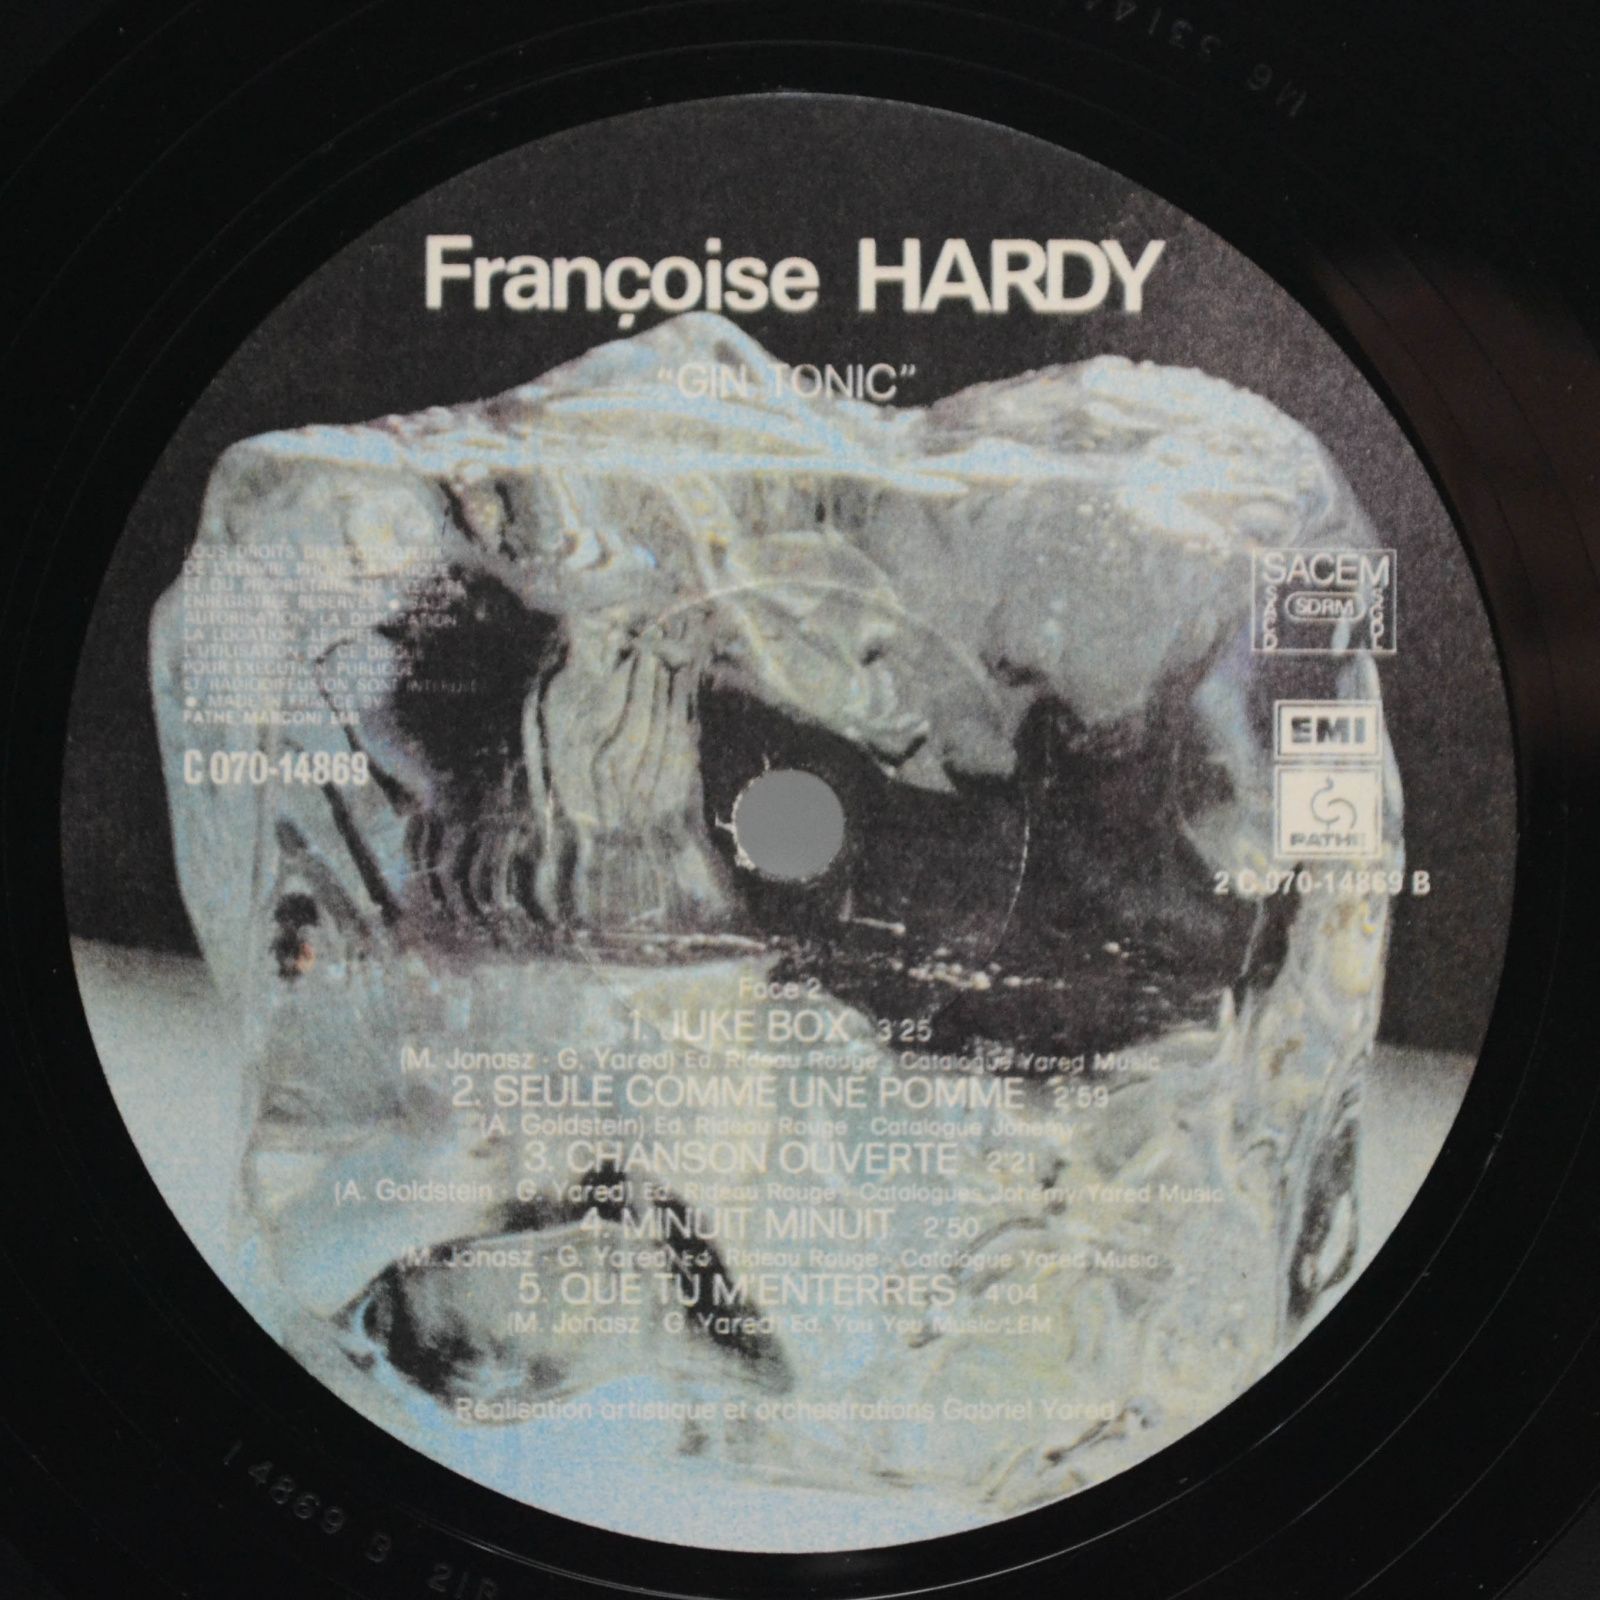 Françoise Hardy — Gin Tonic (1-st, France), 1980